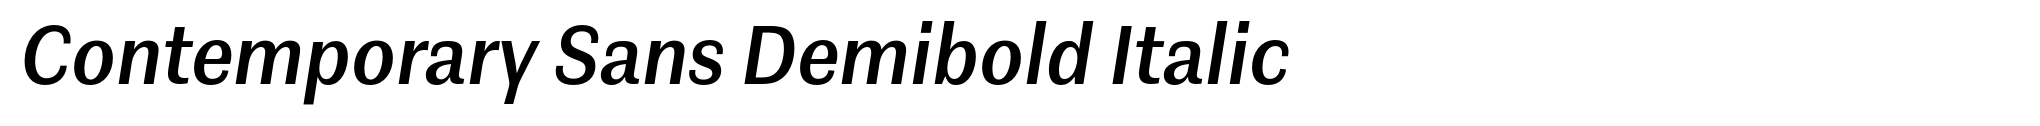 Contemporary Sans Demibold Italic image